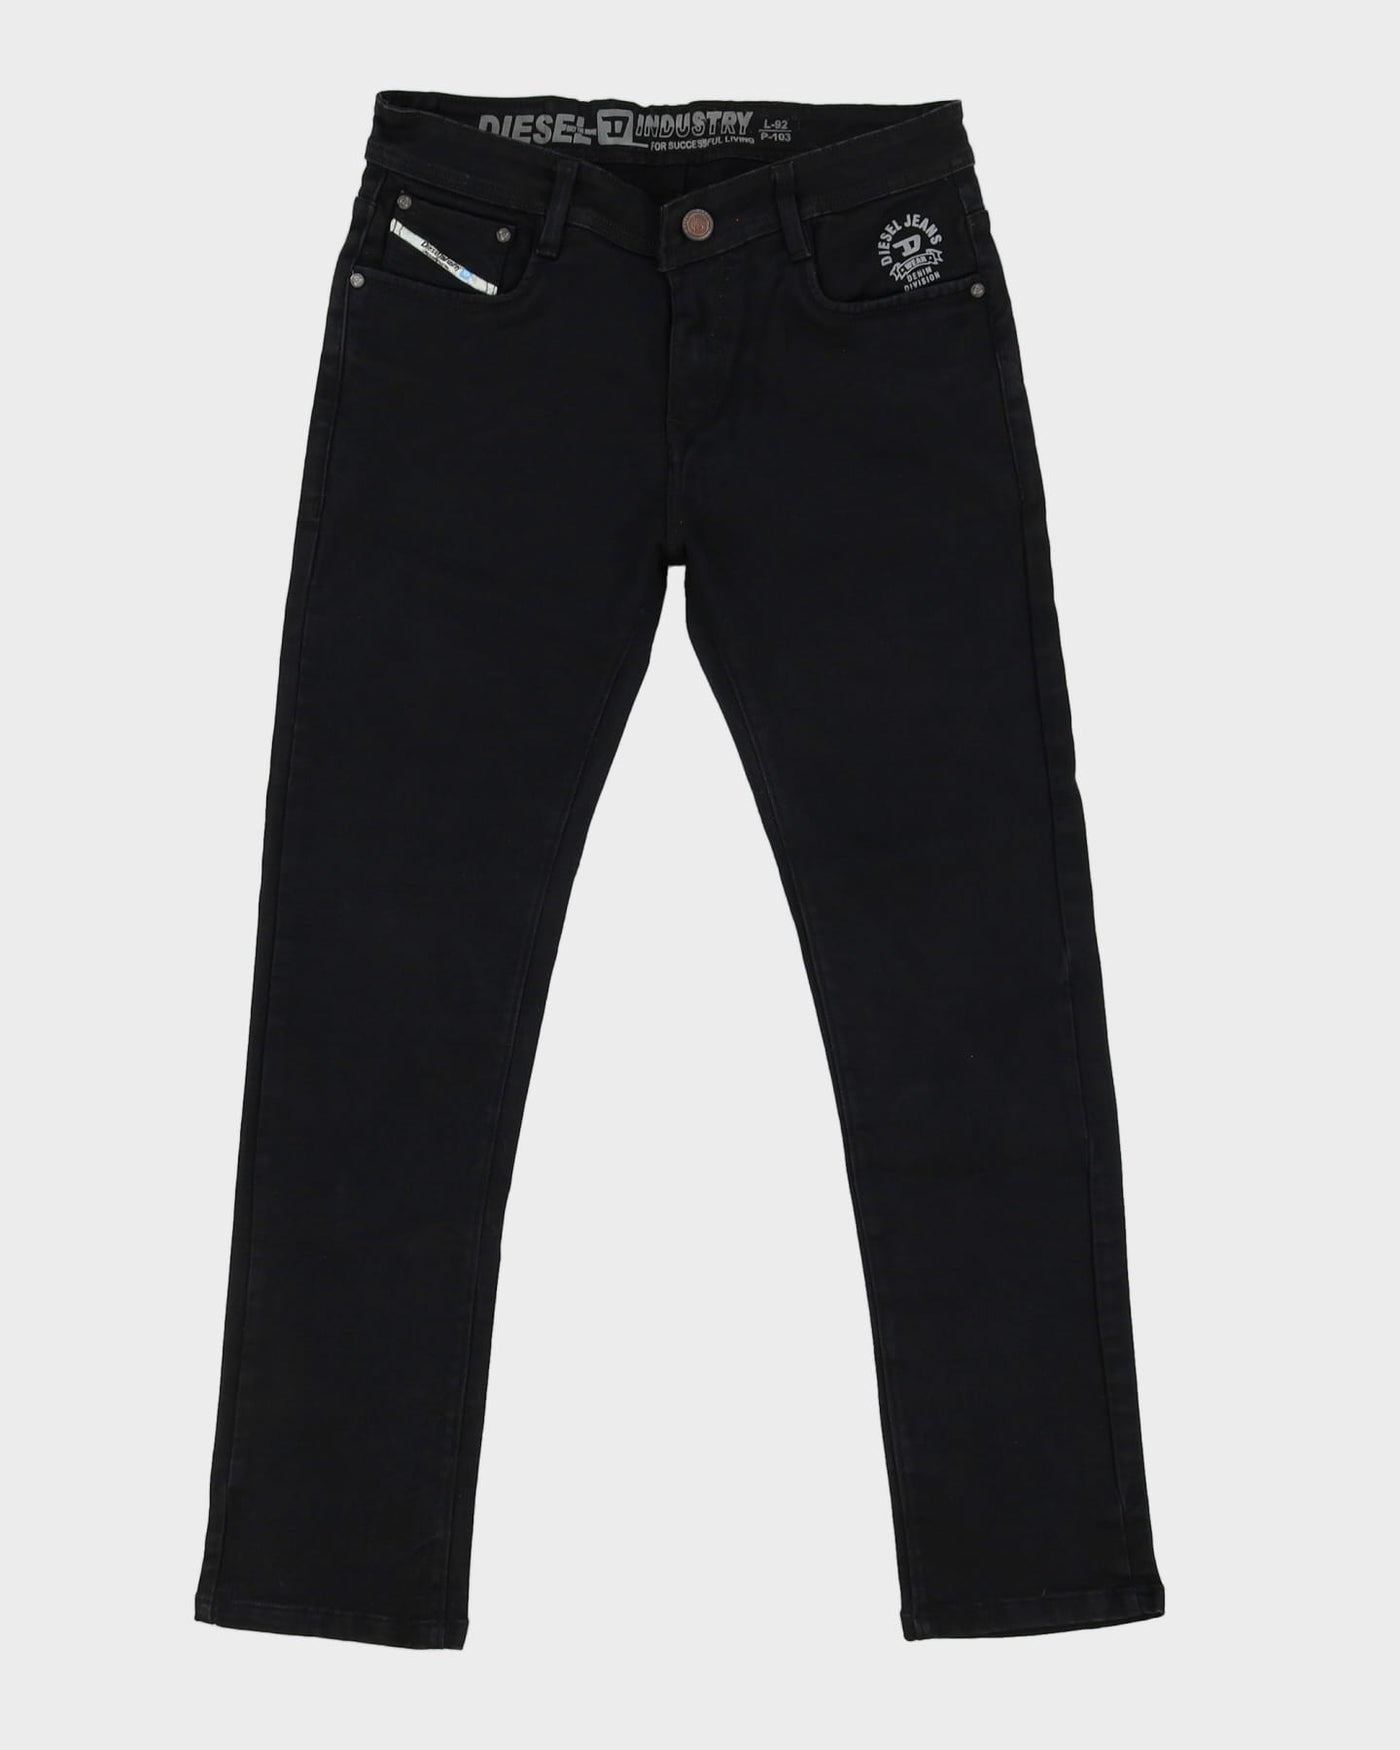 Diesel Black Denim Jeans - W32 L31